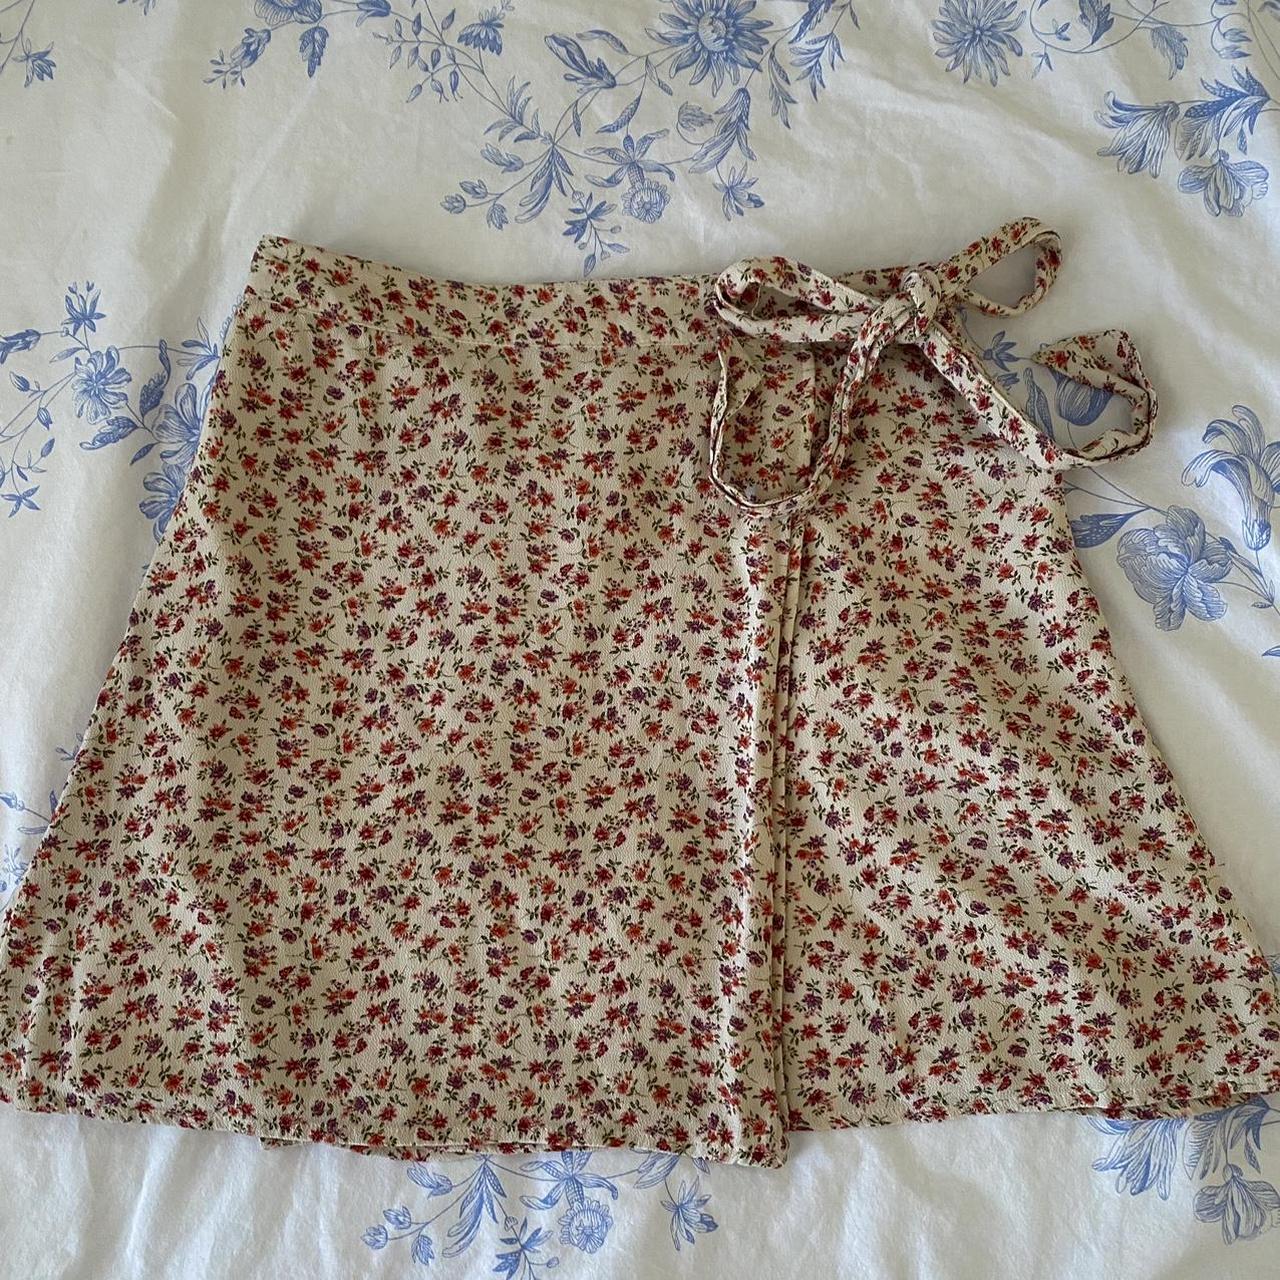 floral tie mini skirt.💐💞 -brand: American eagle... - Depop